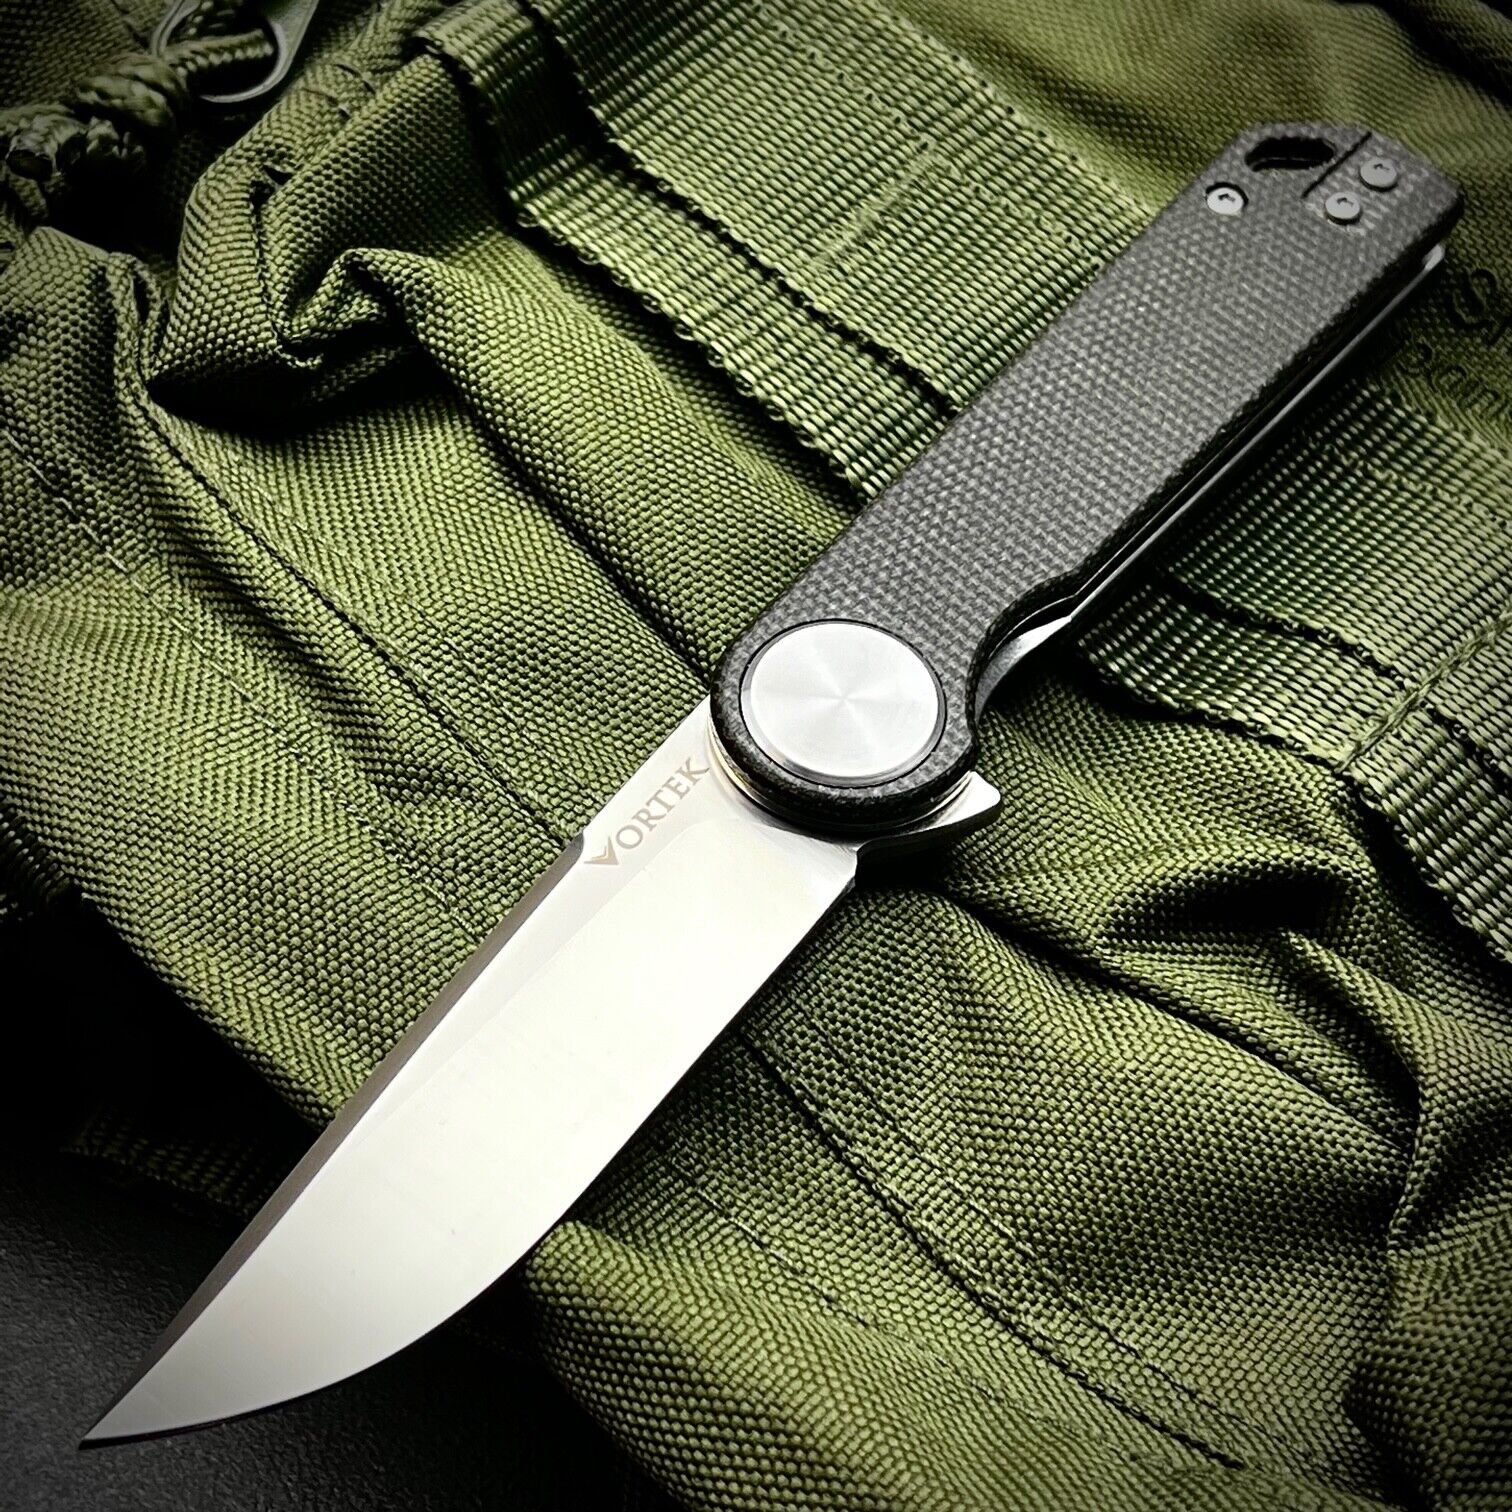 VORTEK FINCH Black Micarta Ball Bearing D2 Flipper Blade Folding Pocket Knife